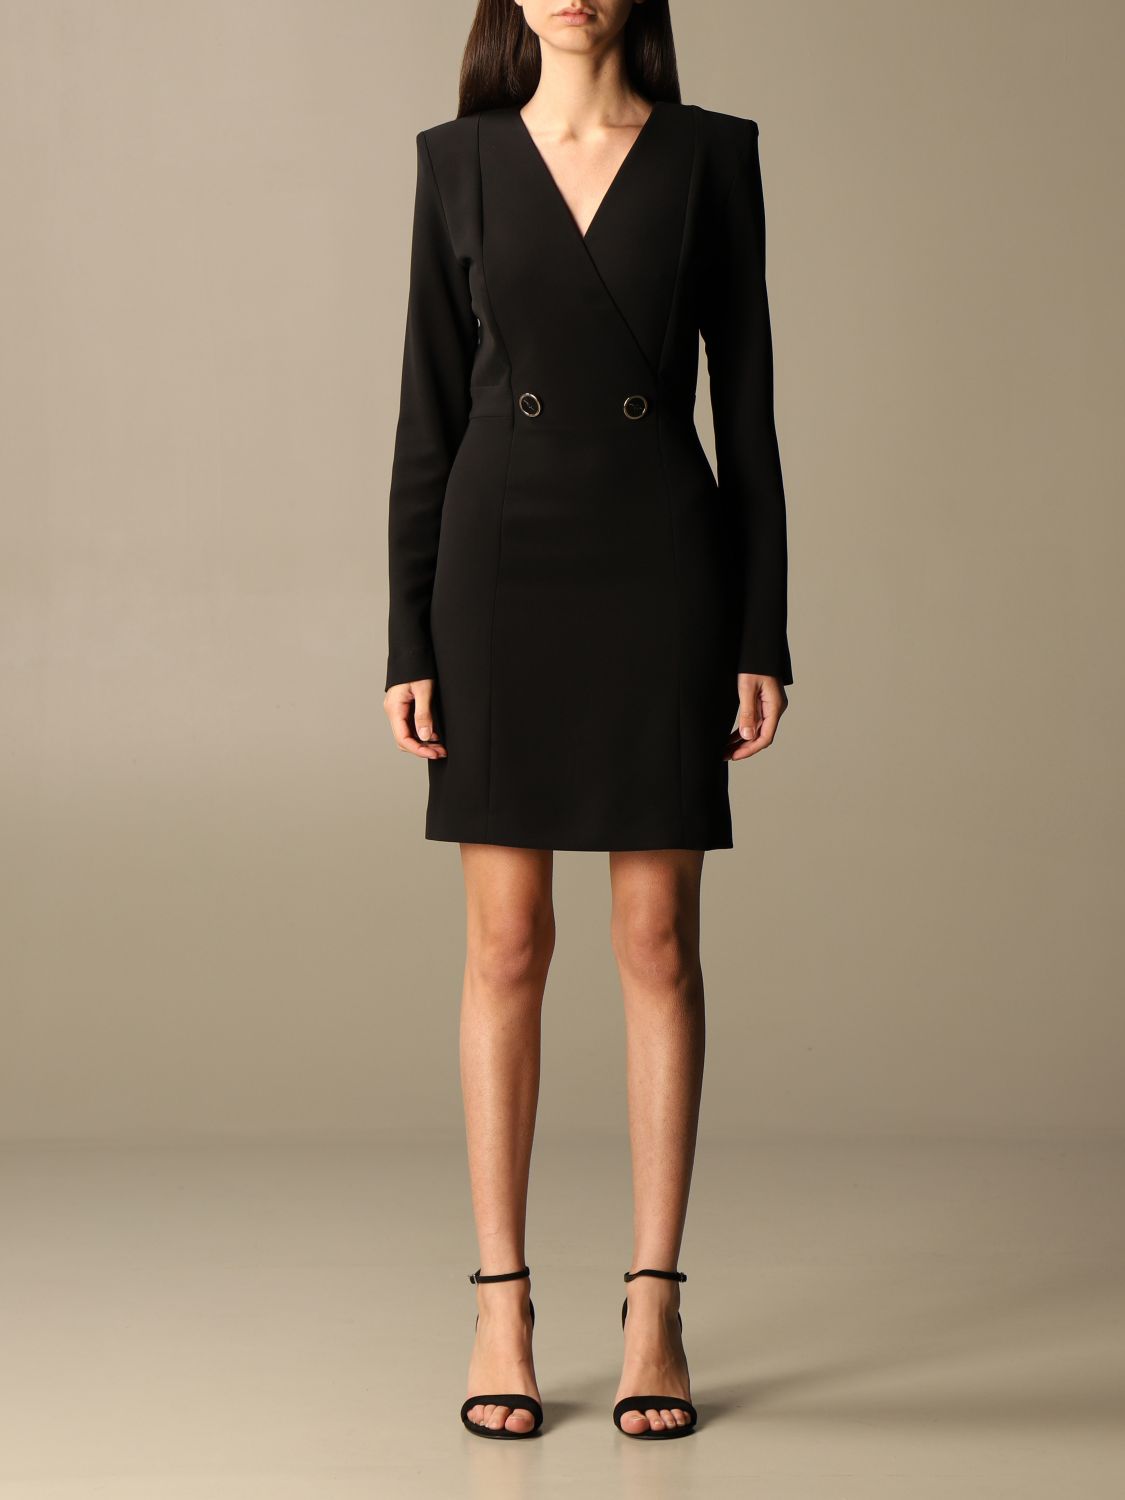 Simona Corsellini Outlet: short dress - Black | Simona Corsellini dress ...